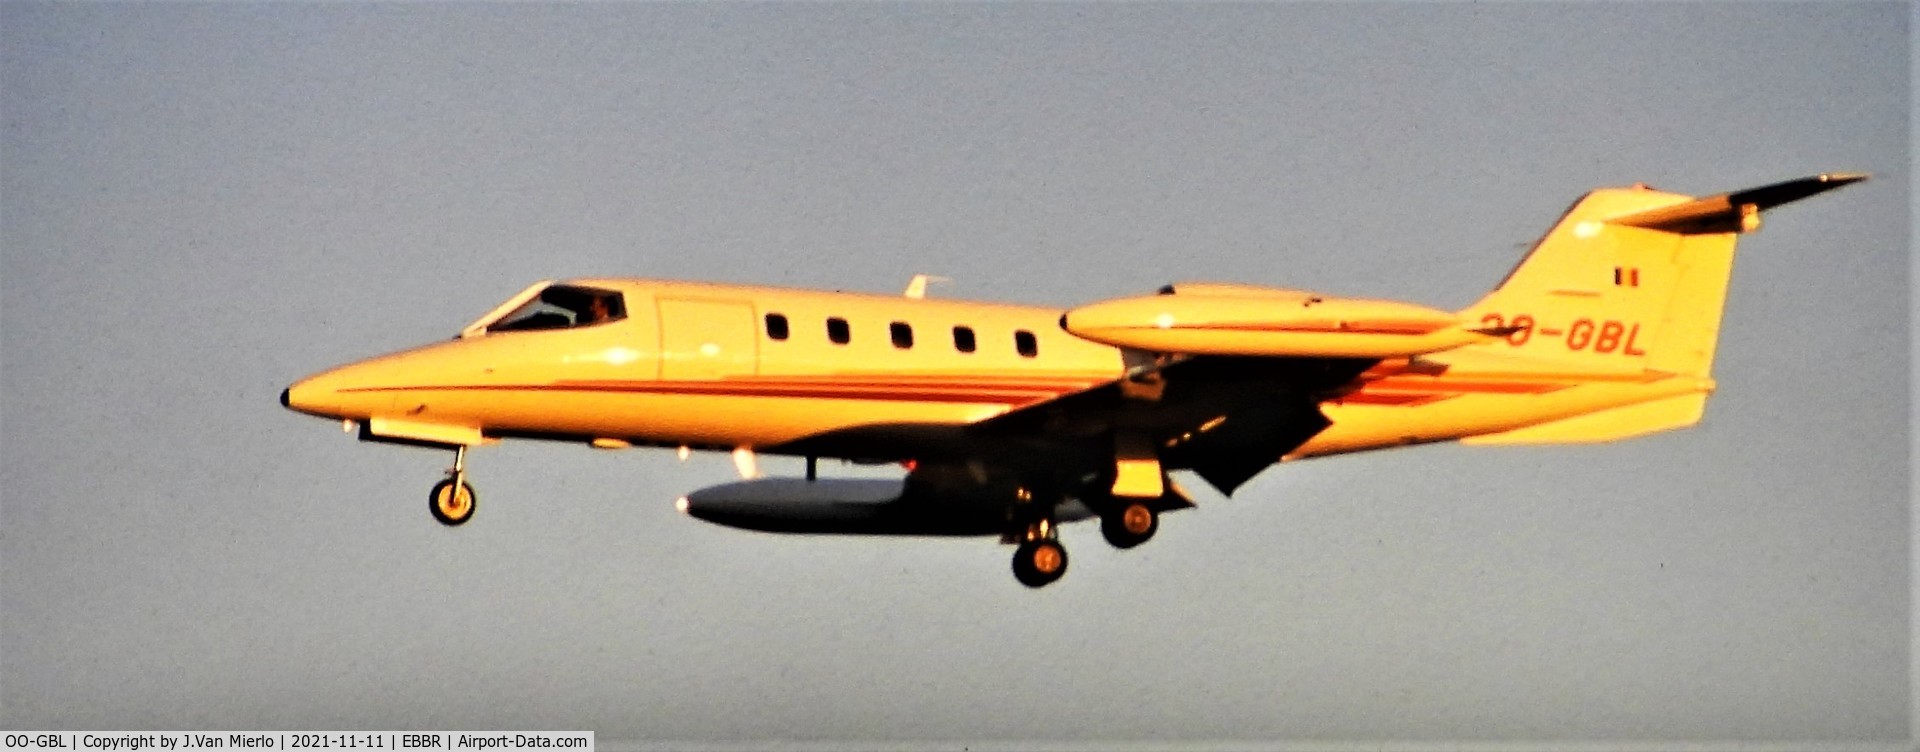 OO-GBL, 1980 Learjet 35A C/N 284, Landing at Brussels by sunset 25R slide scan